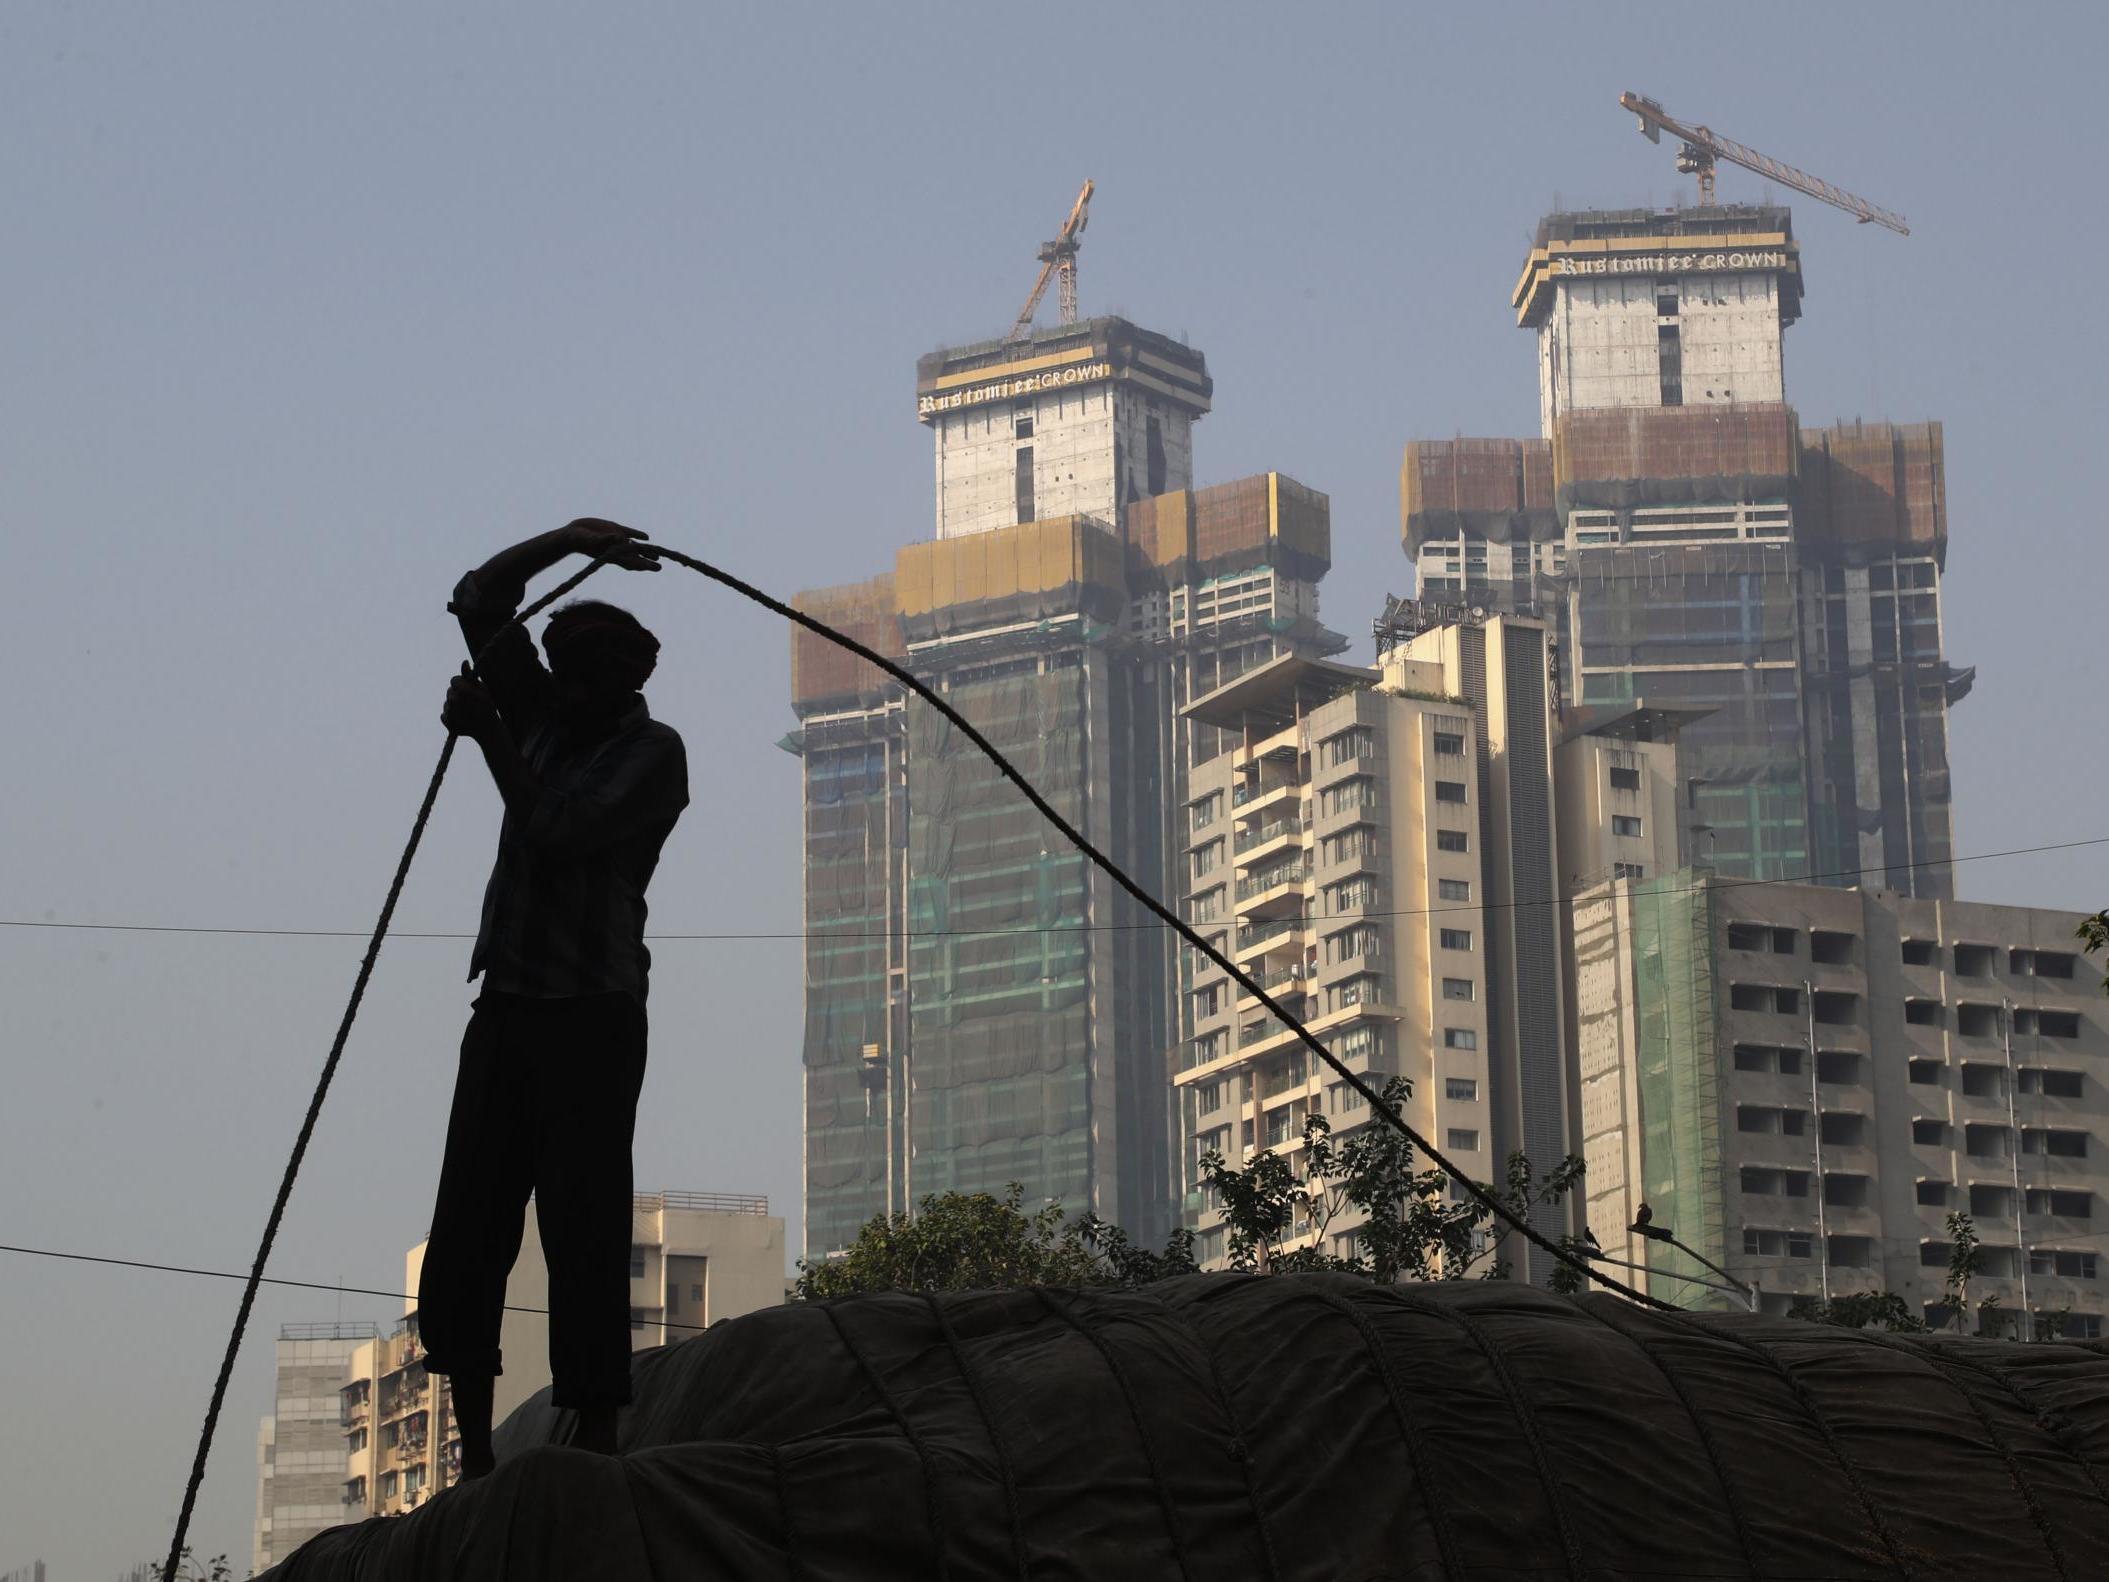 A man works near buildings under construction in Mumbai on 1 February